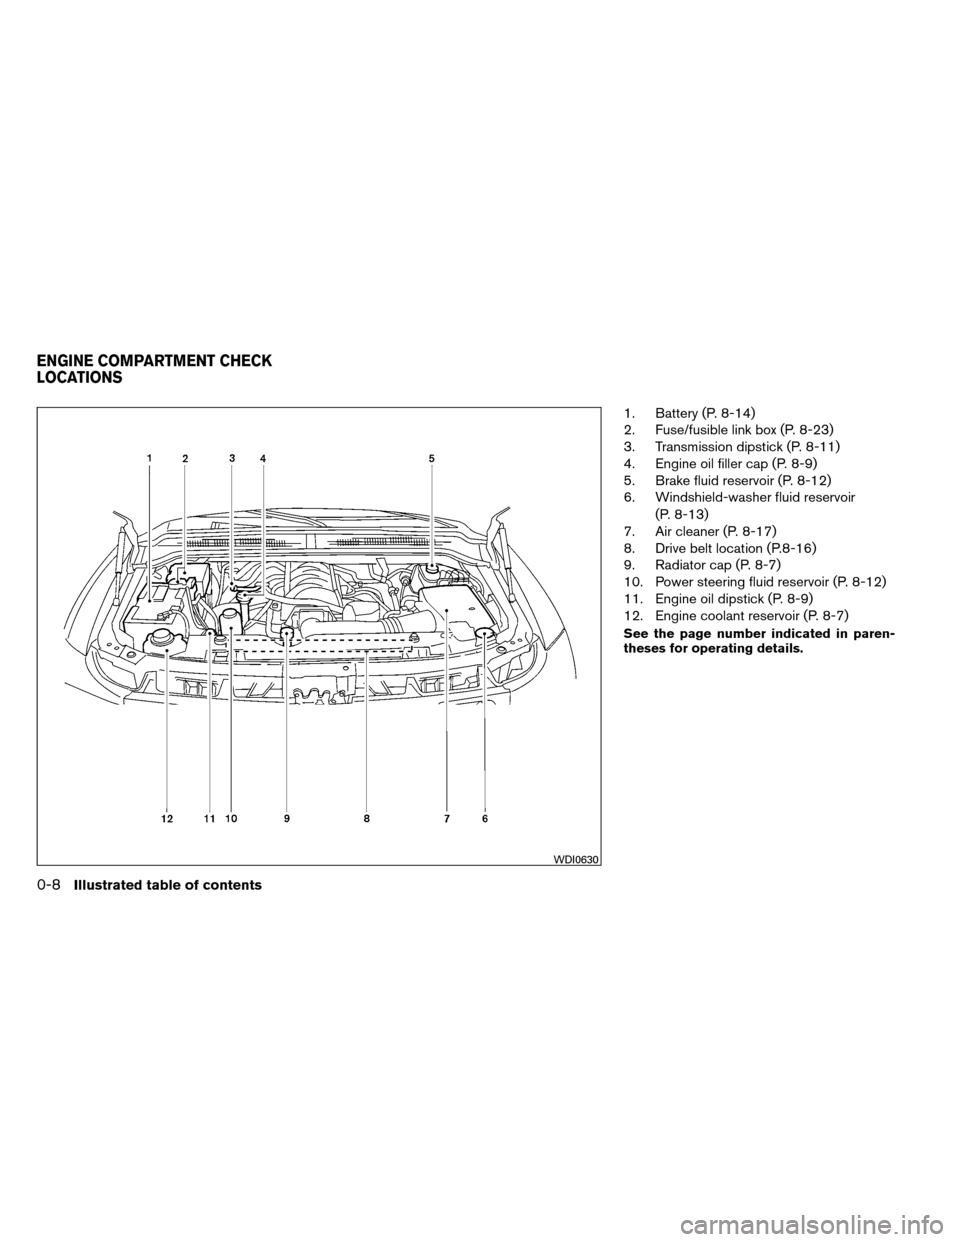 NISSAN ARMADA 2012 1.G User Guide 1. Battery (P. 8-14)
2. Fuse/fusible link box (P. 8-23)
3. Transmission dipstick (P. 8-11)
4. Engine oil filler cap (P. 8-9)
5. Brake fluid reservoir (P. 8-12)
6. Windshield-washer fluid reservoir(P. 